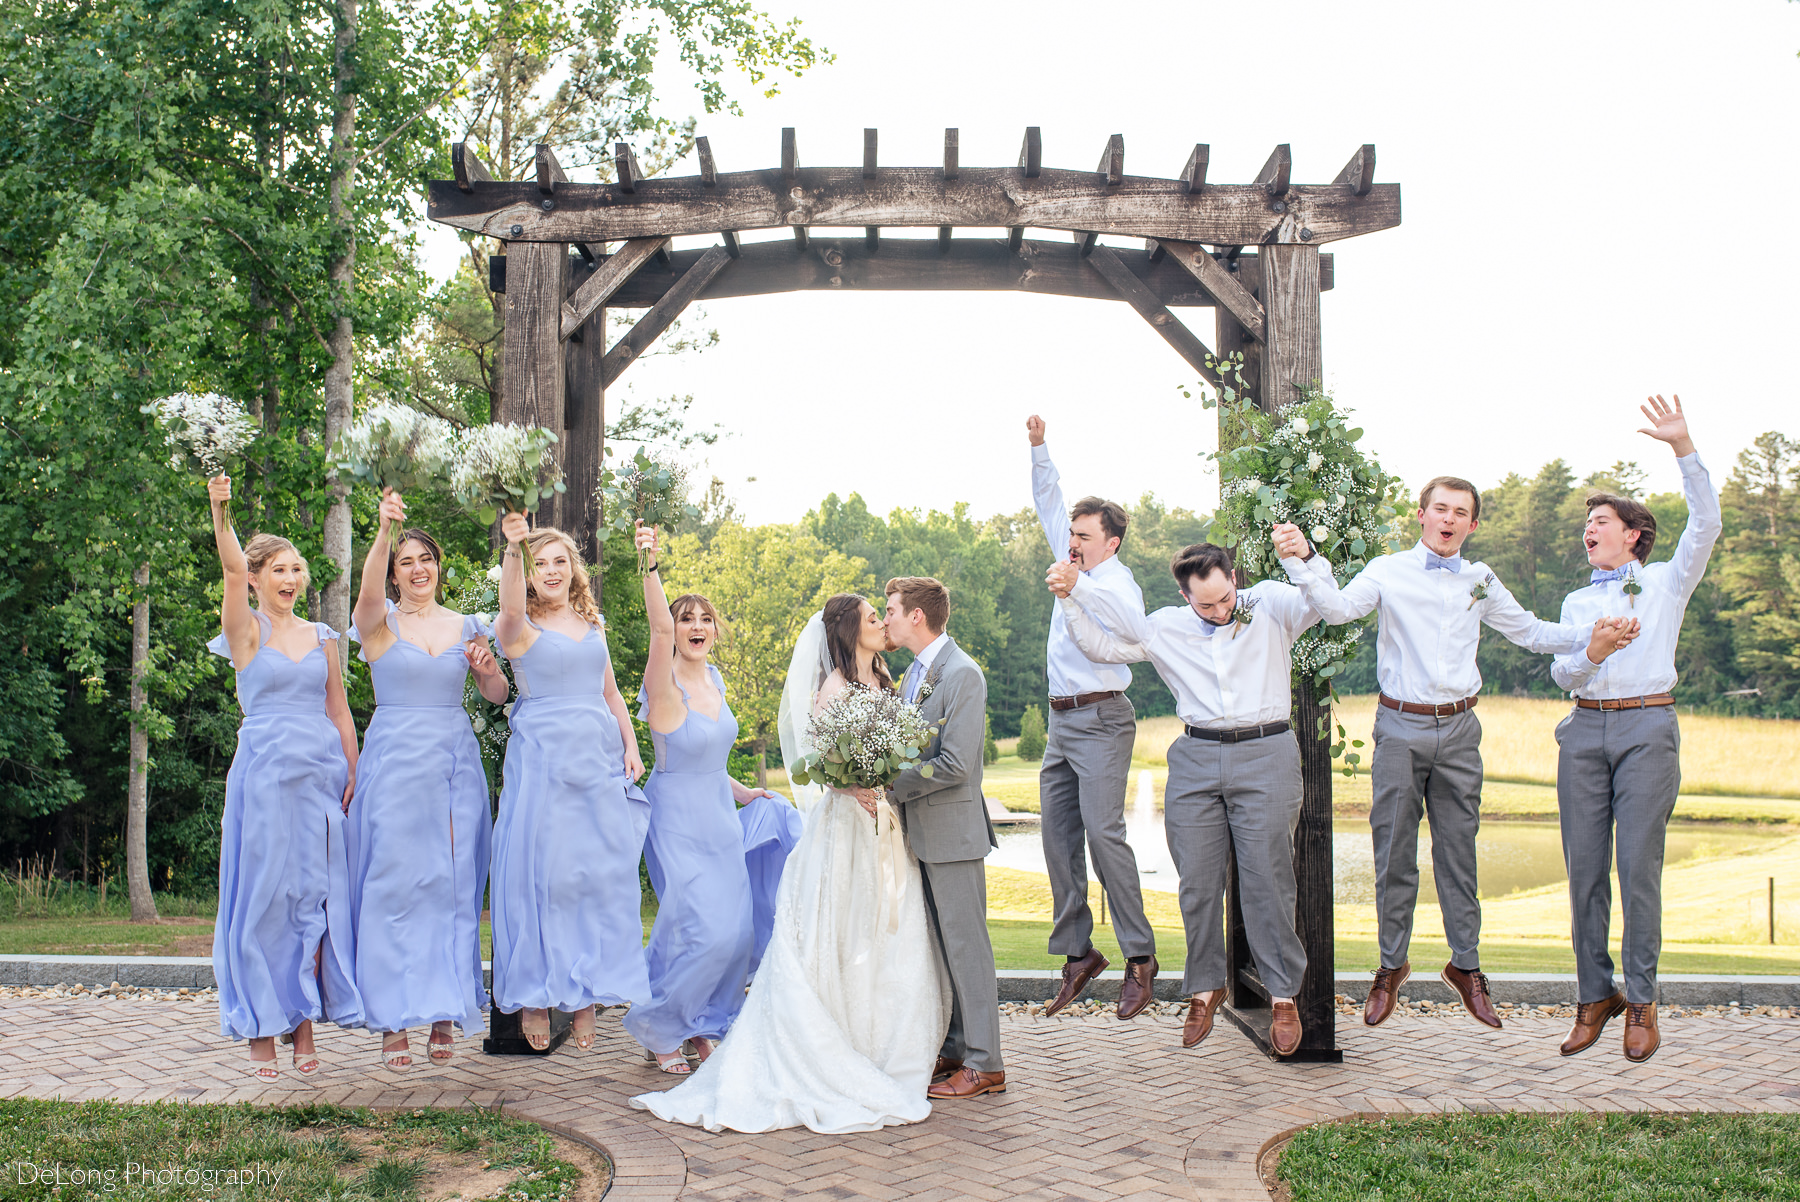 Fun jumping photo of wedding party at Lady Bird Farms